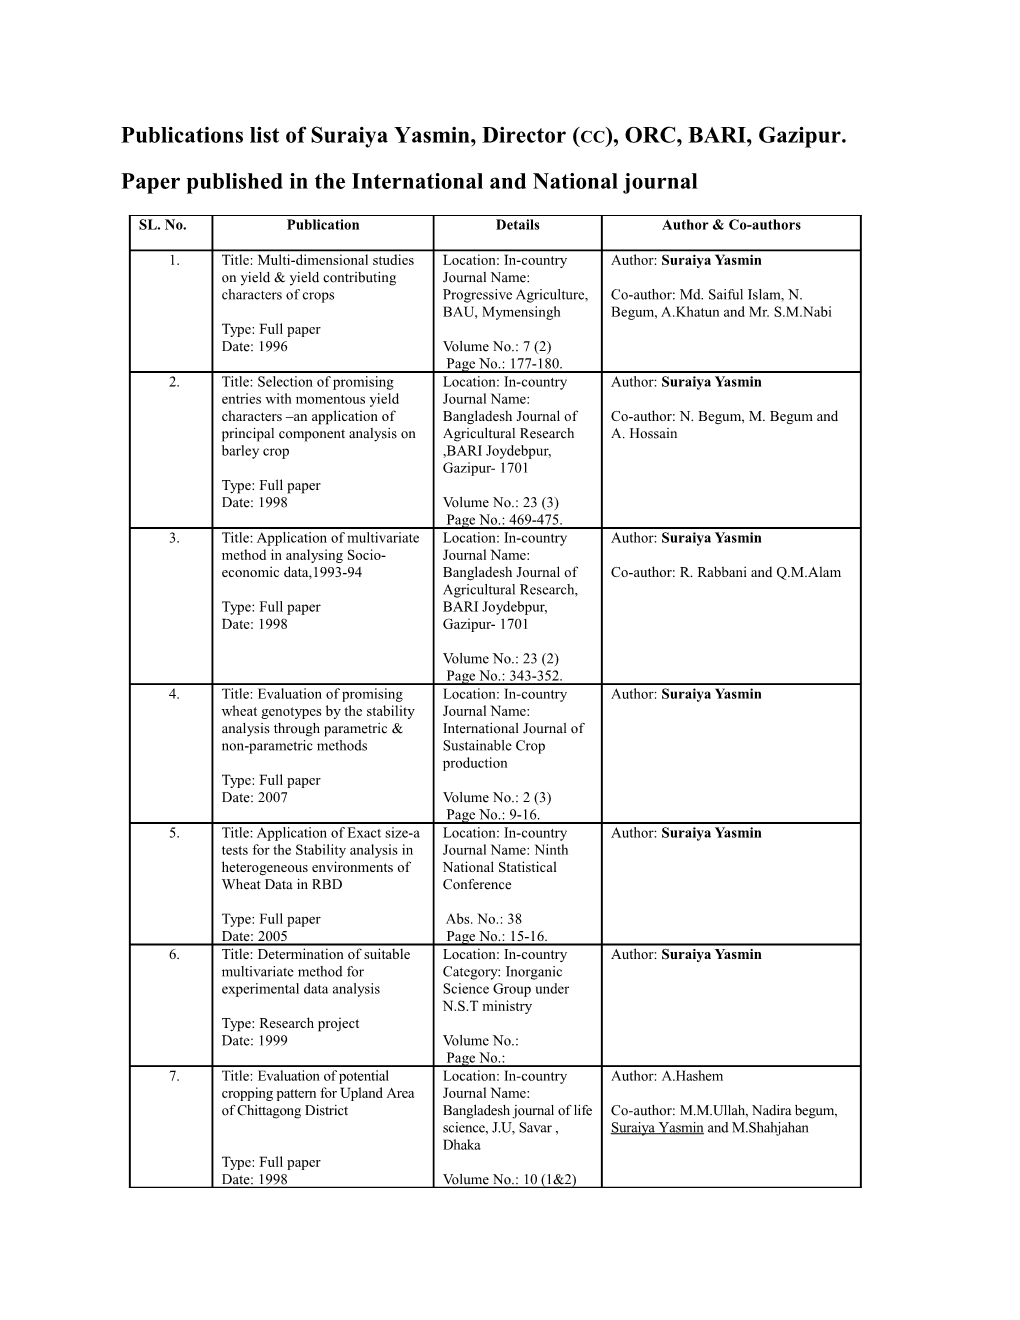 Publications List of Suraiyayasmin, Director (Cc), ORC, BARI, Gazipur